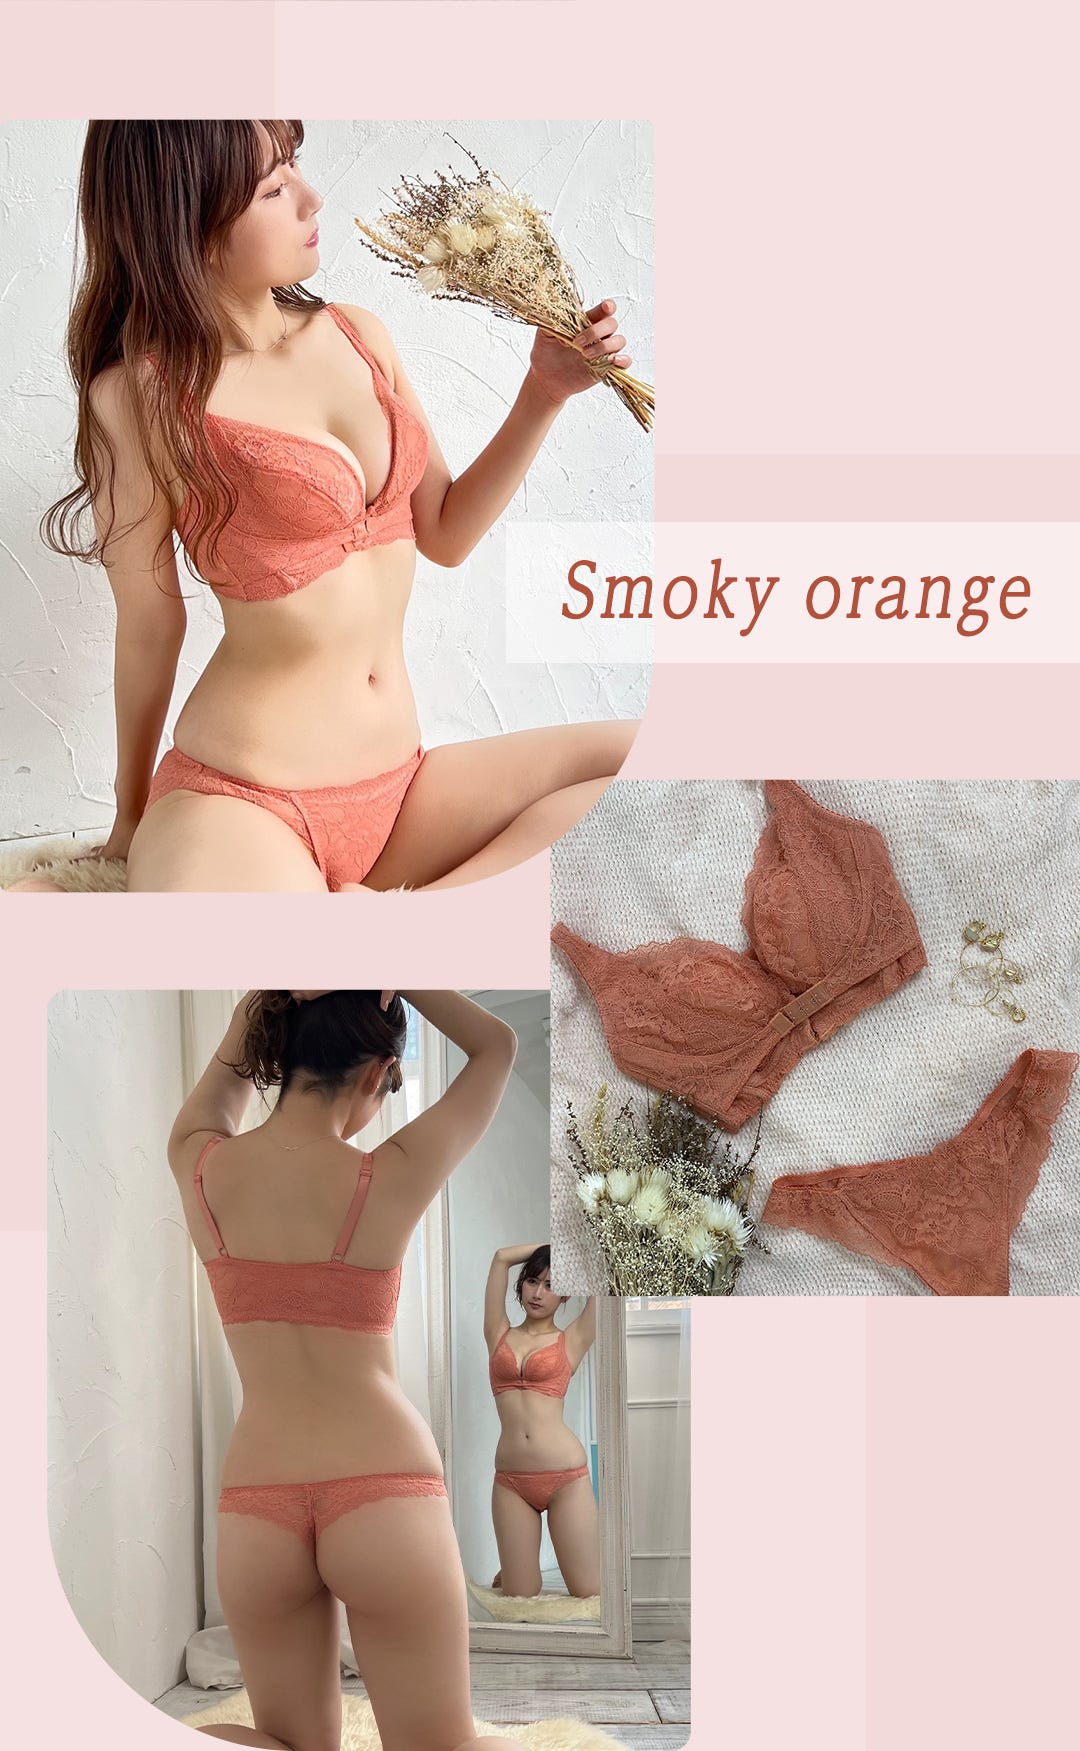 Smoky orange